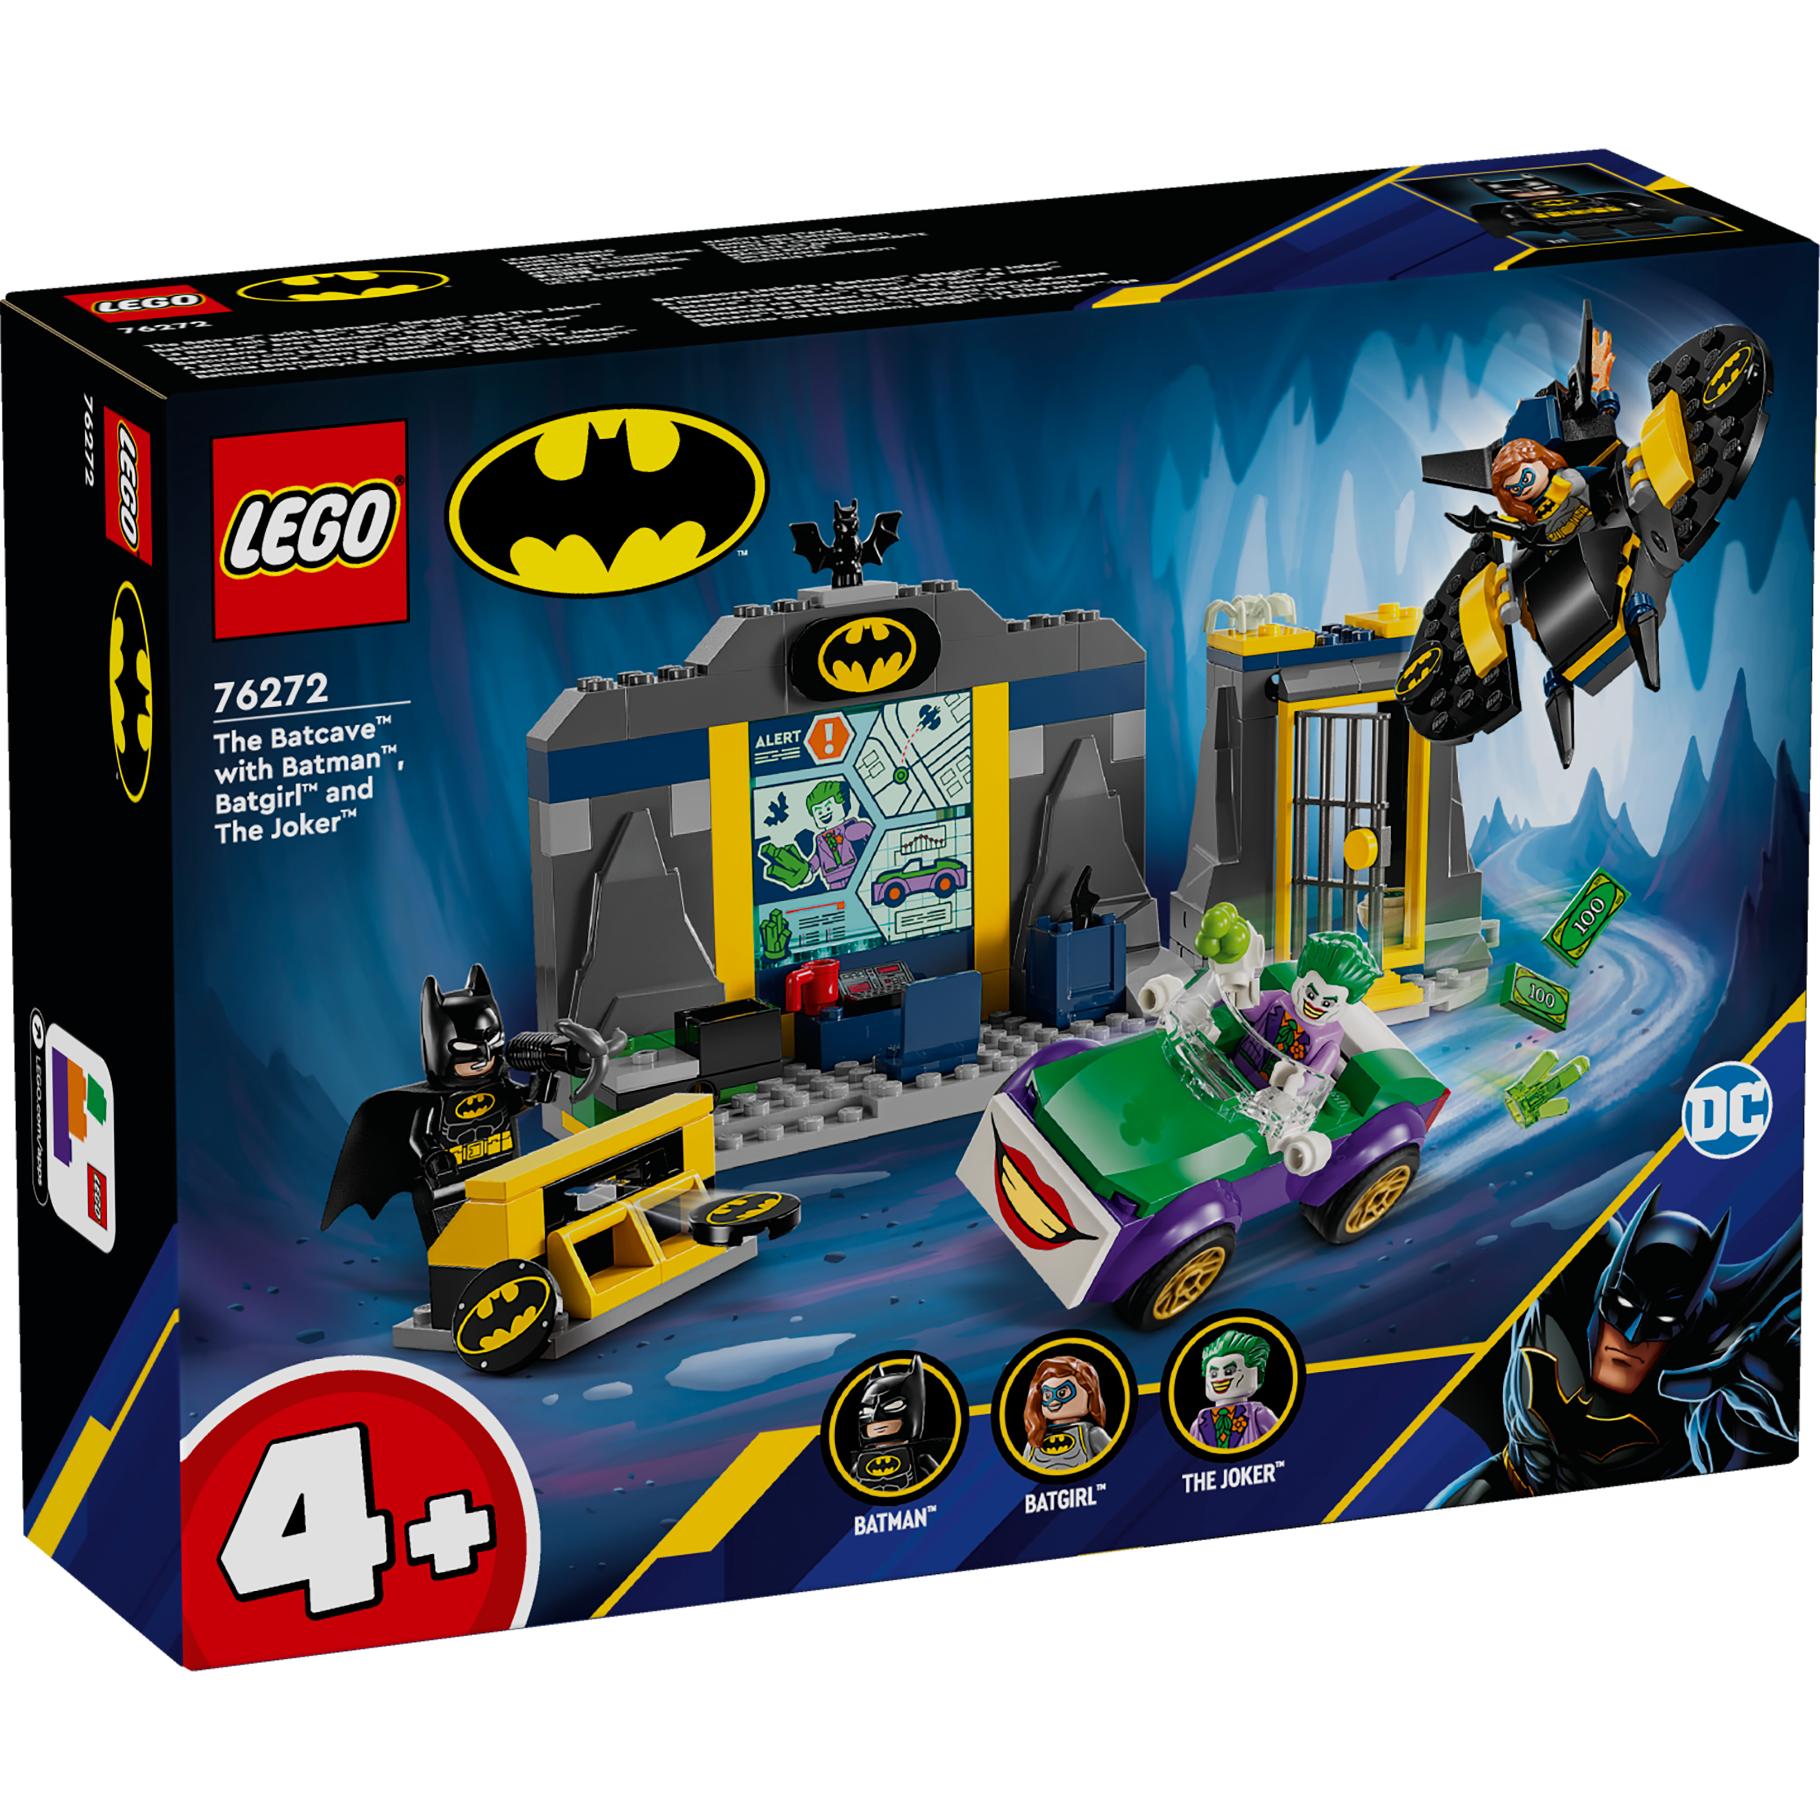 Lego 76272 DC Super Heroes Bathöhle mit Batman, Batgirl und Joker, Konstruktionsspielzeug